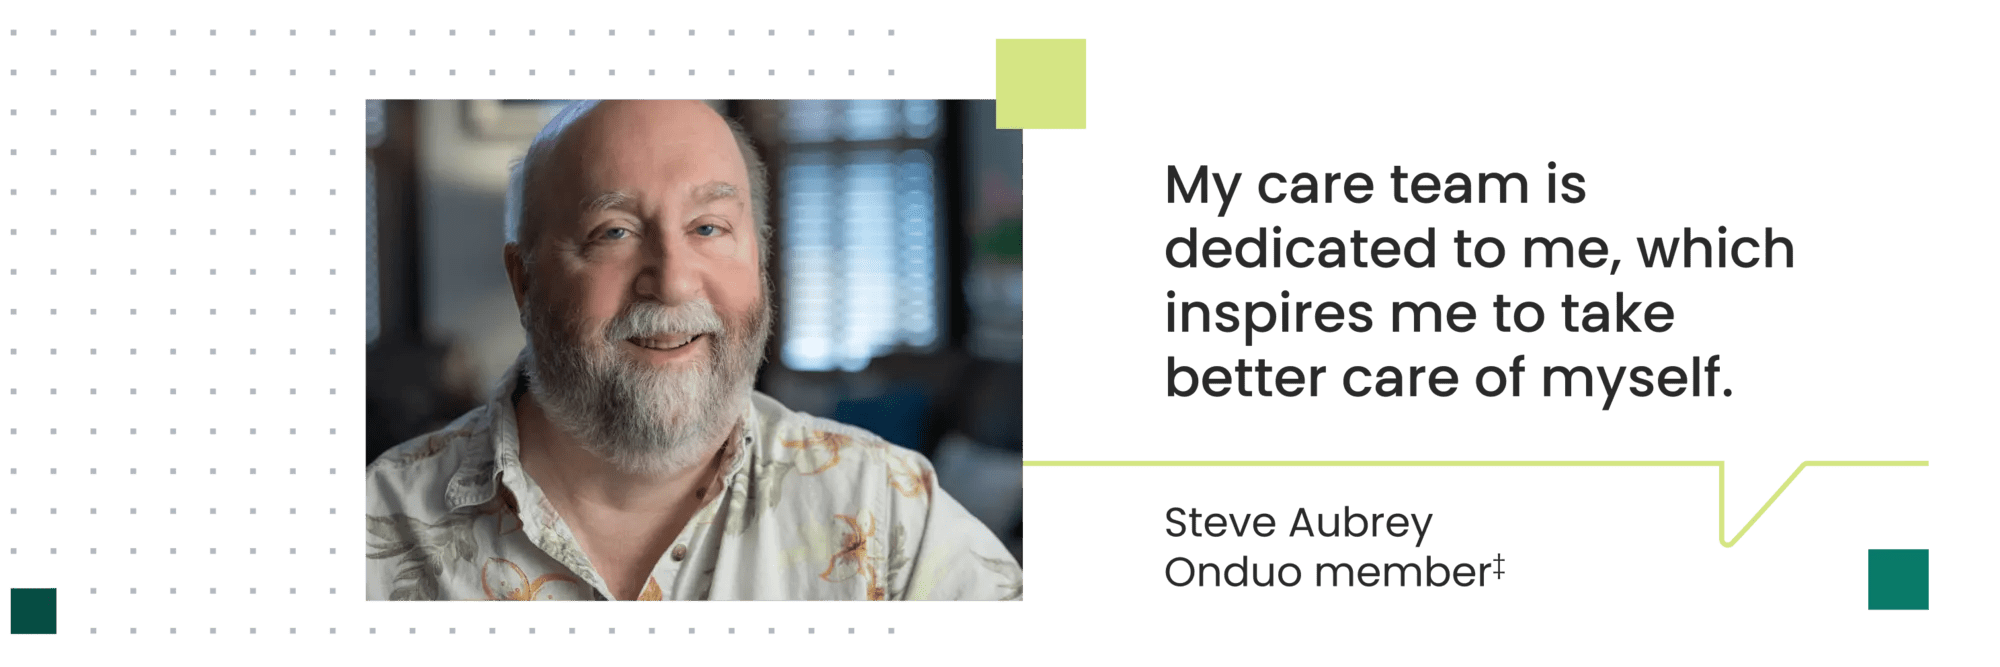 Onduo virtual care management solution member Steve Aubrey